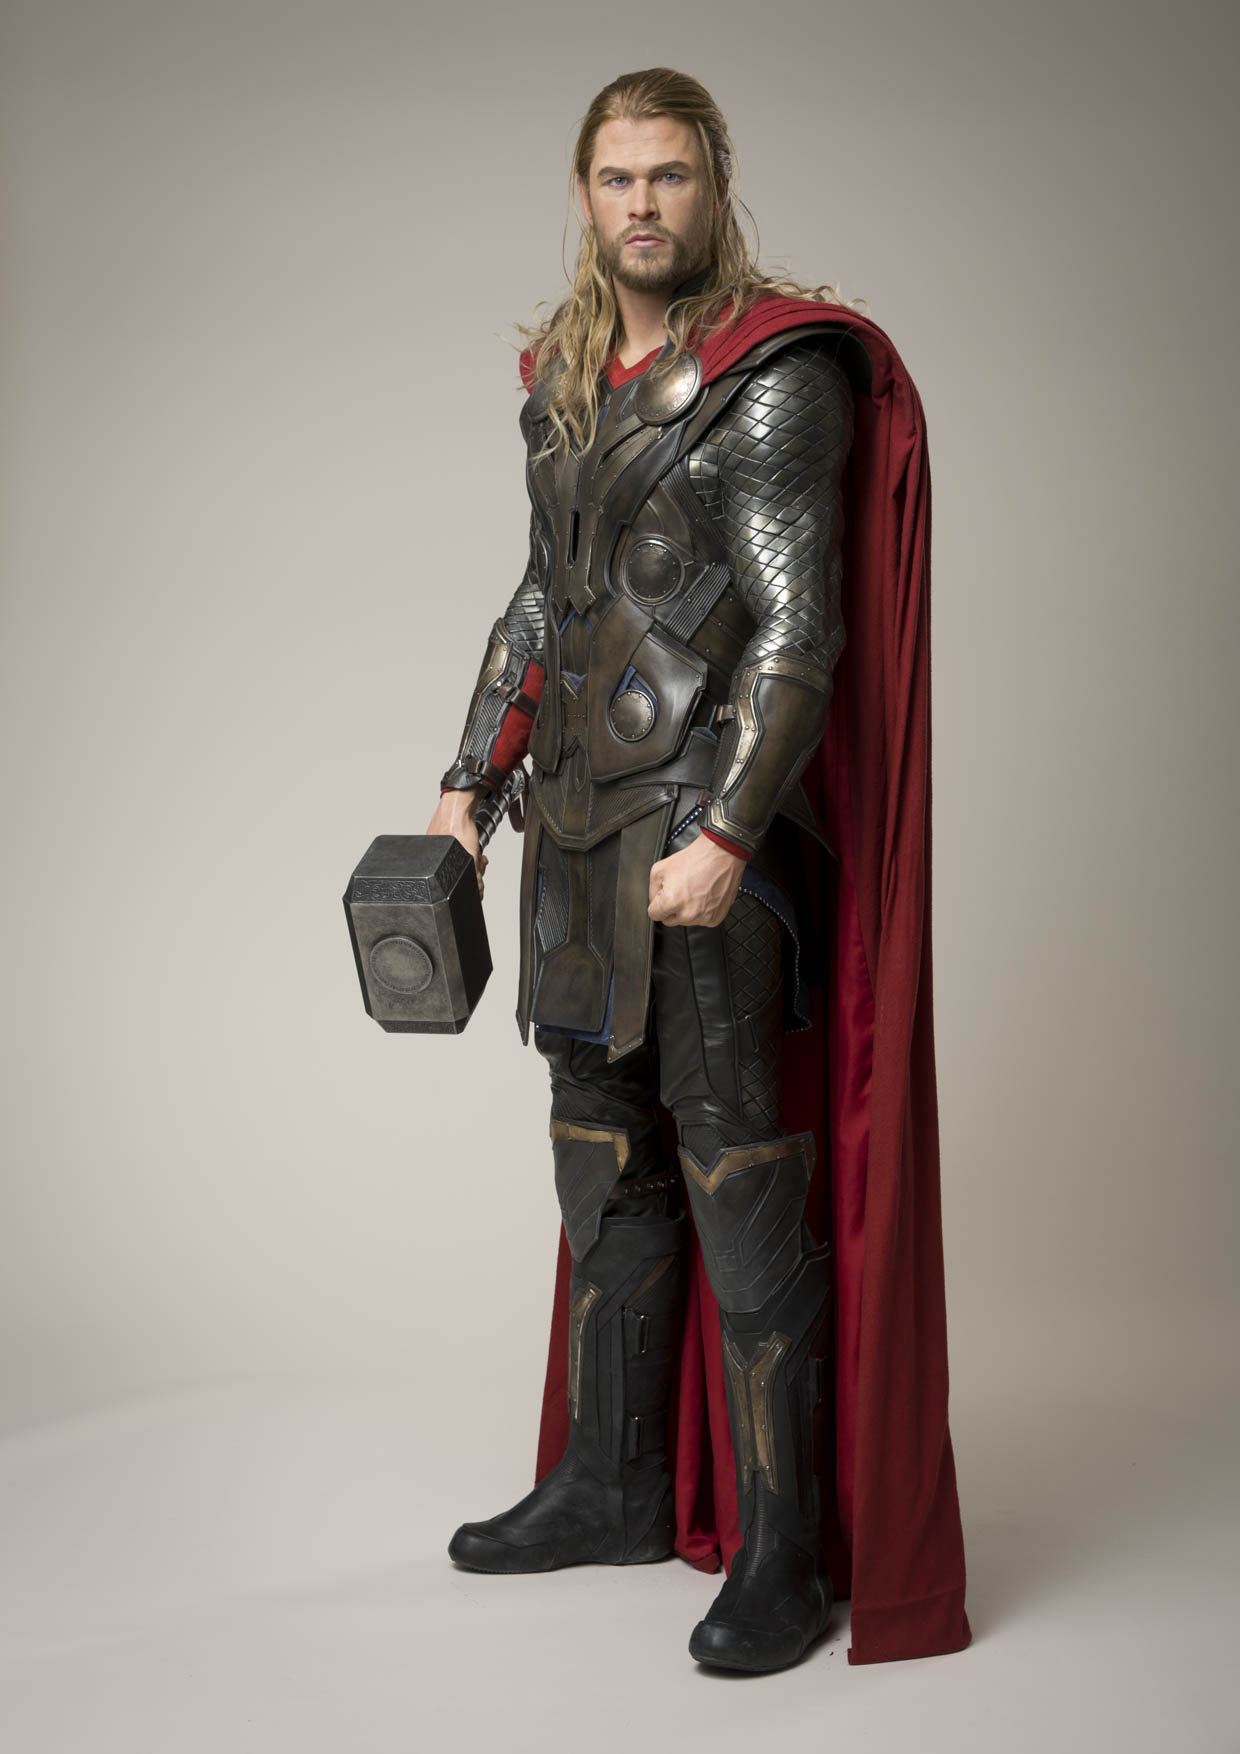 Dsc7120 Chris Hemsworth As Thor Mta 2016